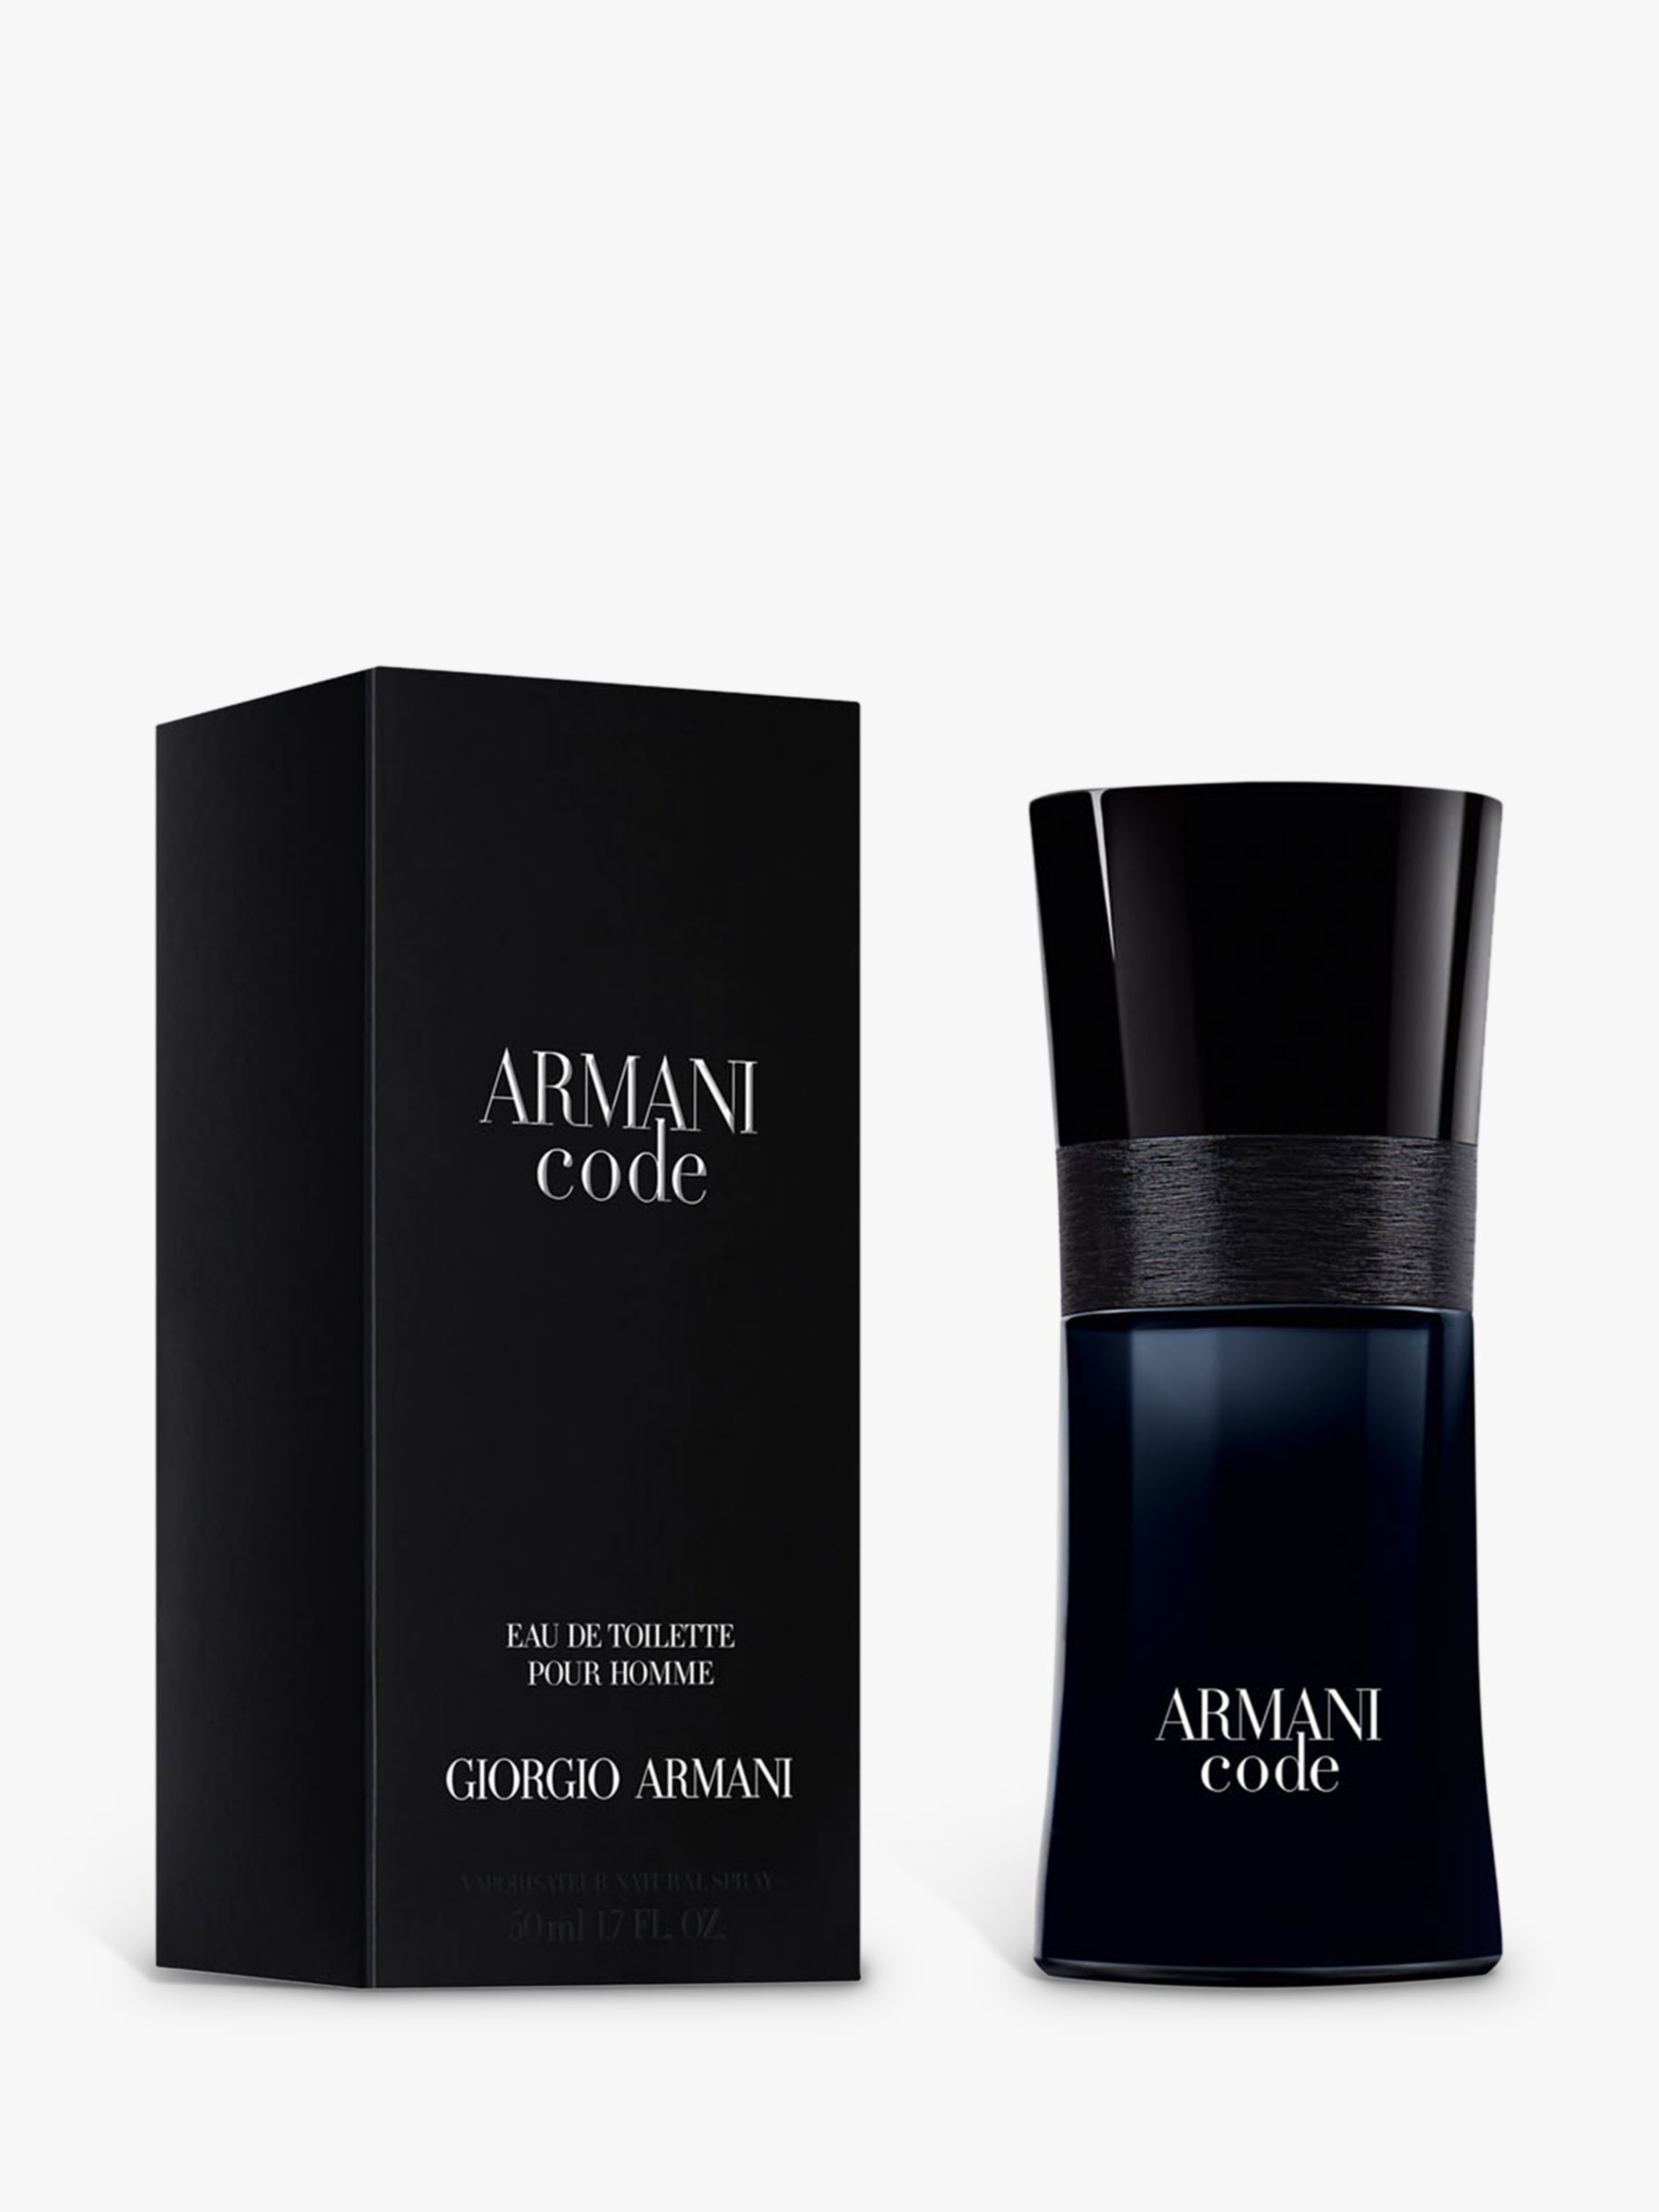 black code fragrance